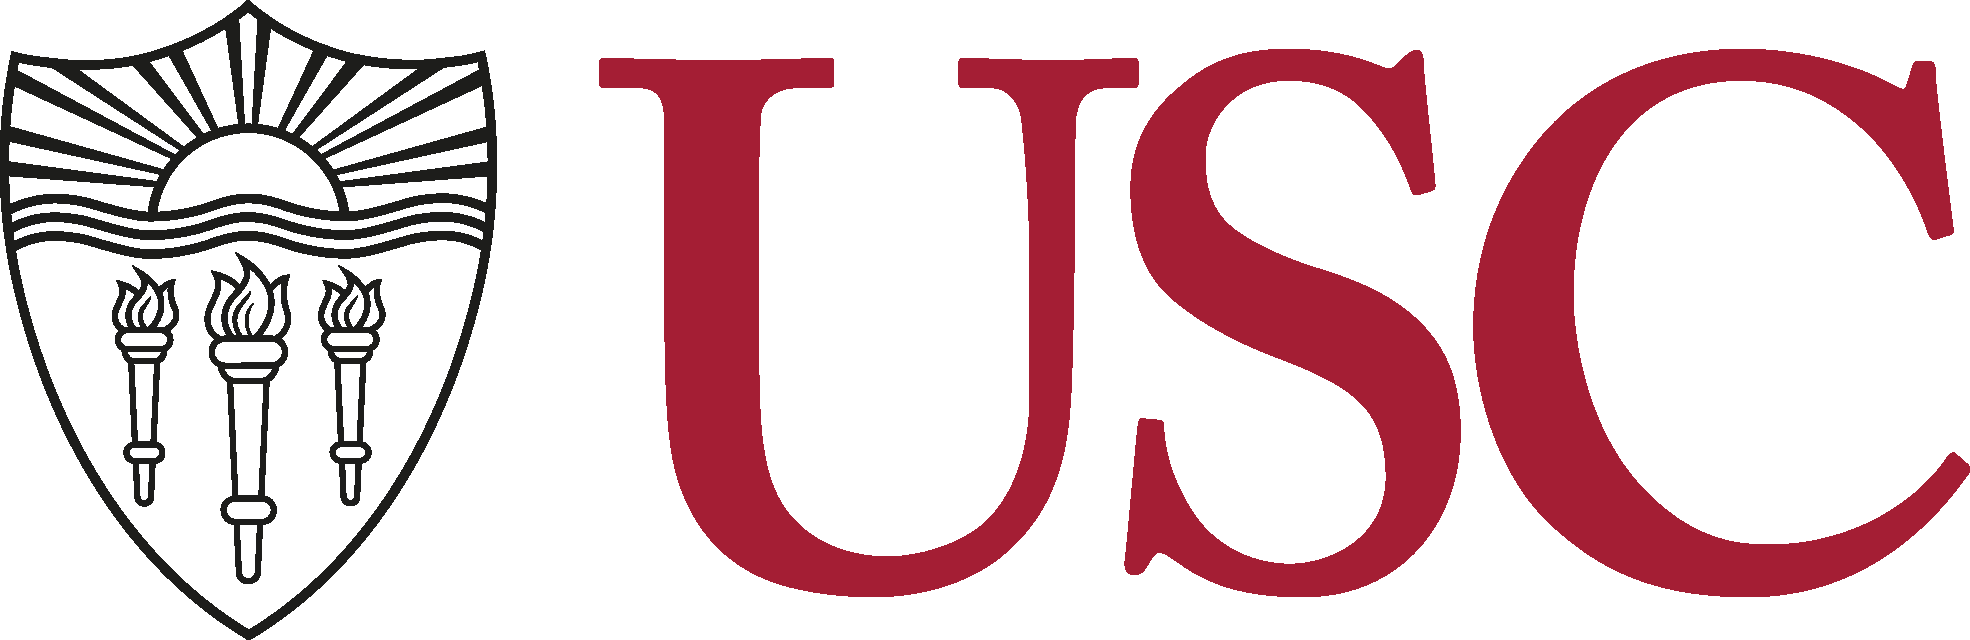 USC Logo [University of Southern California]